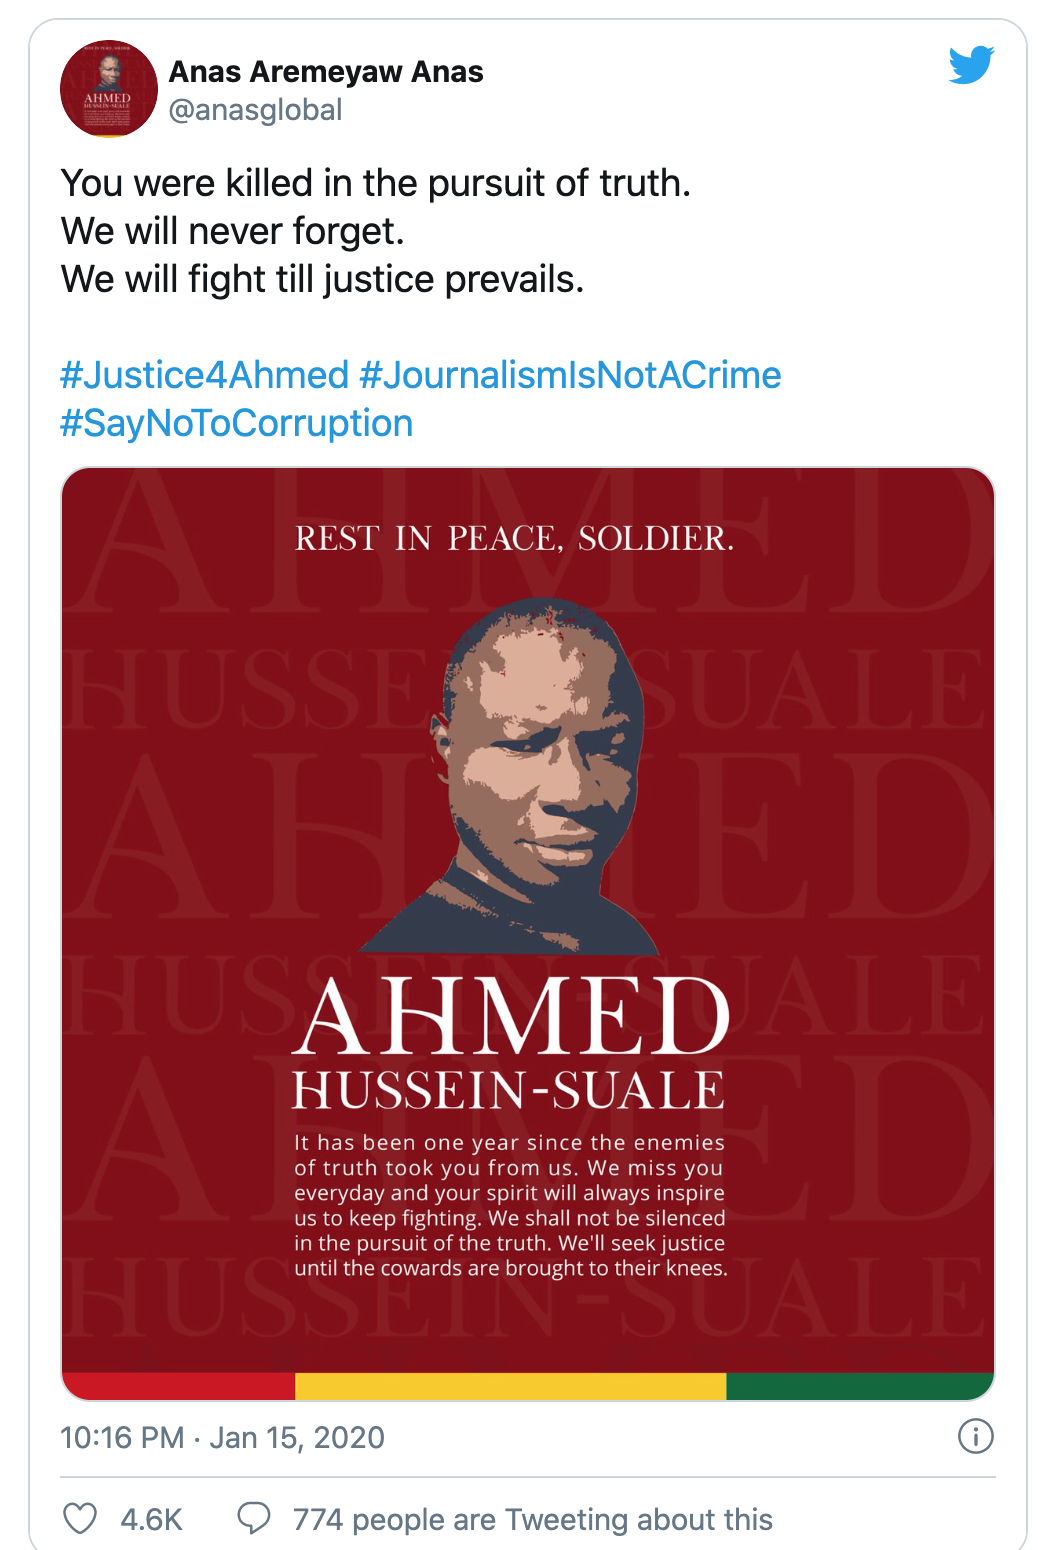 Twitter screenshot honoring Ahmed Hussein-Suale